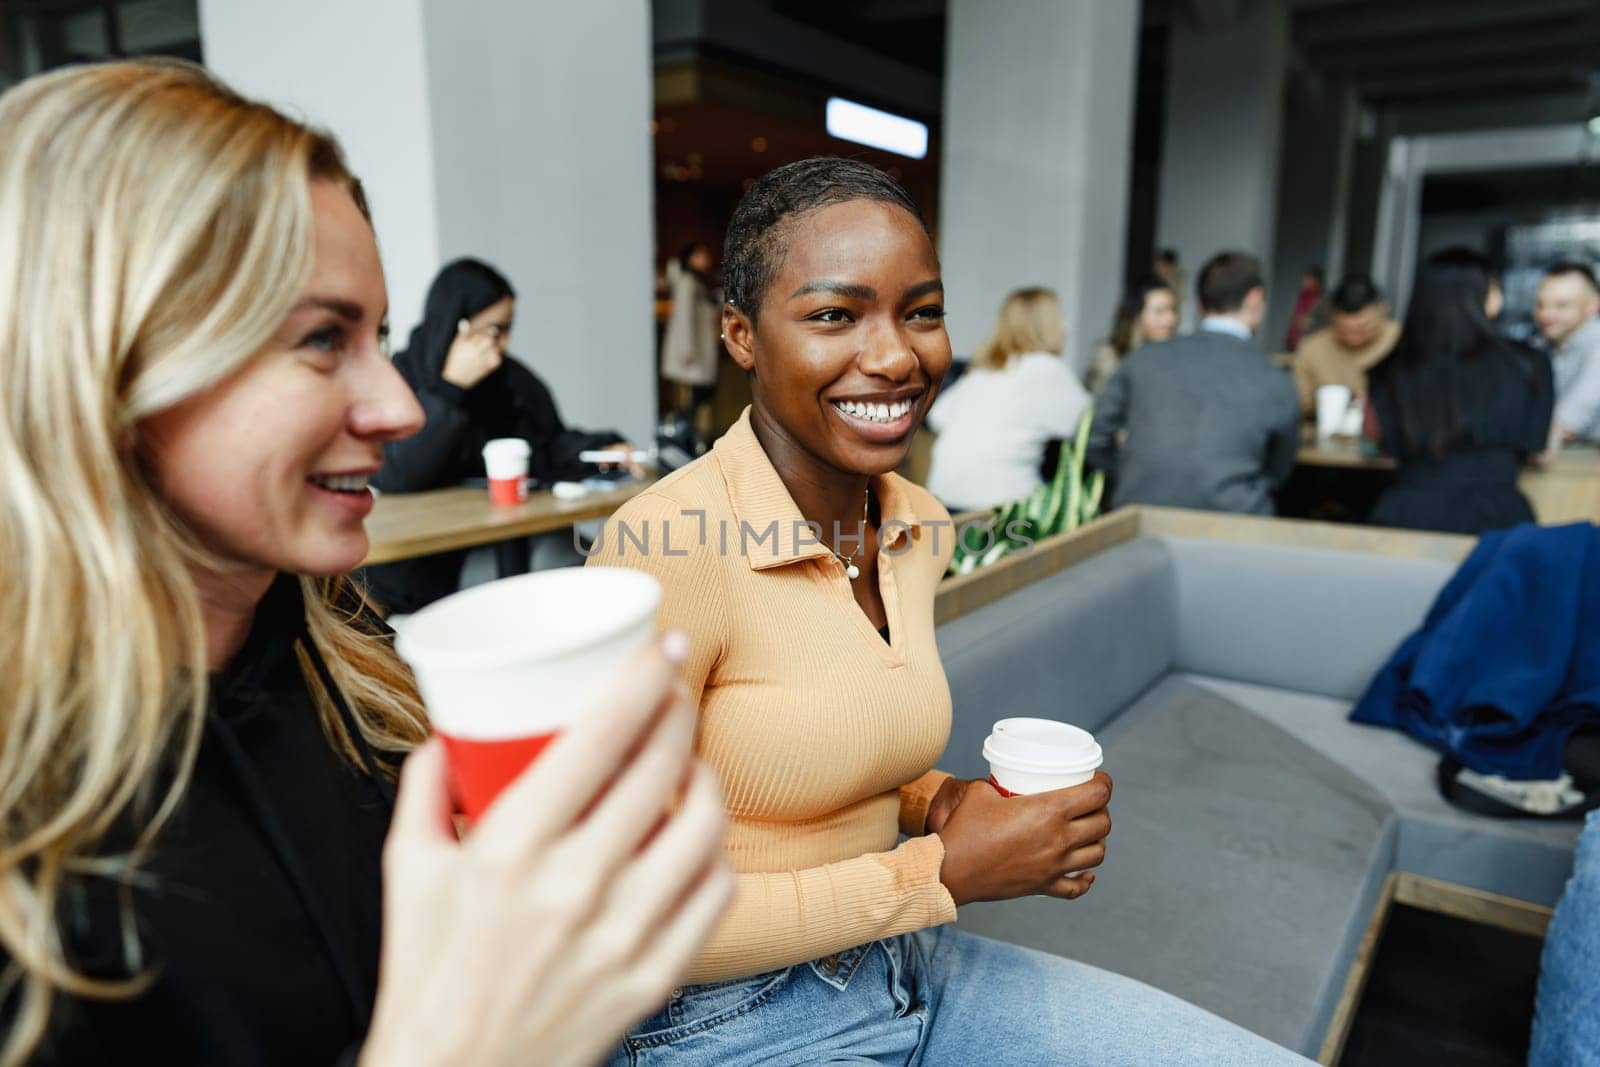 Two young women friends enjoying coffee together in a coffee shop by Fabrikasimf